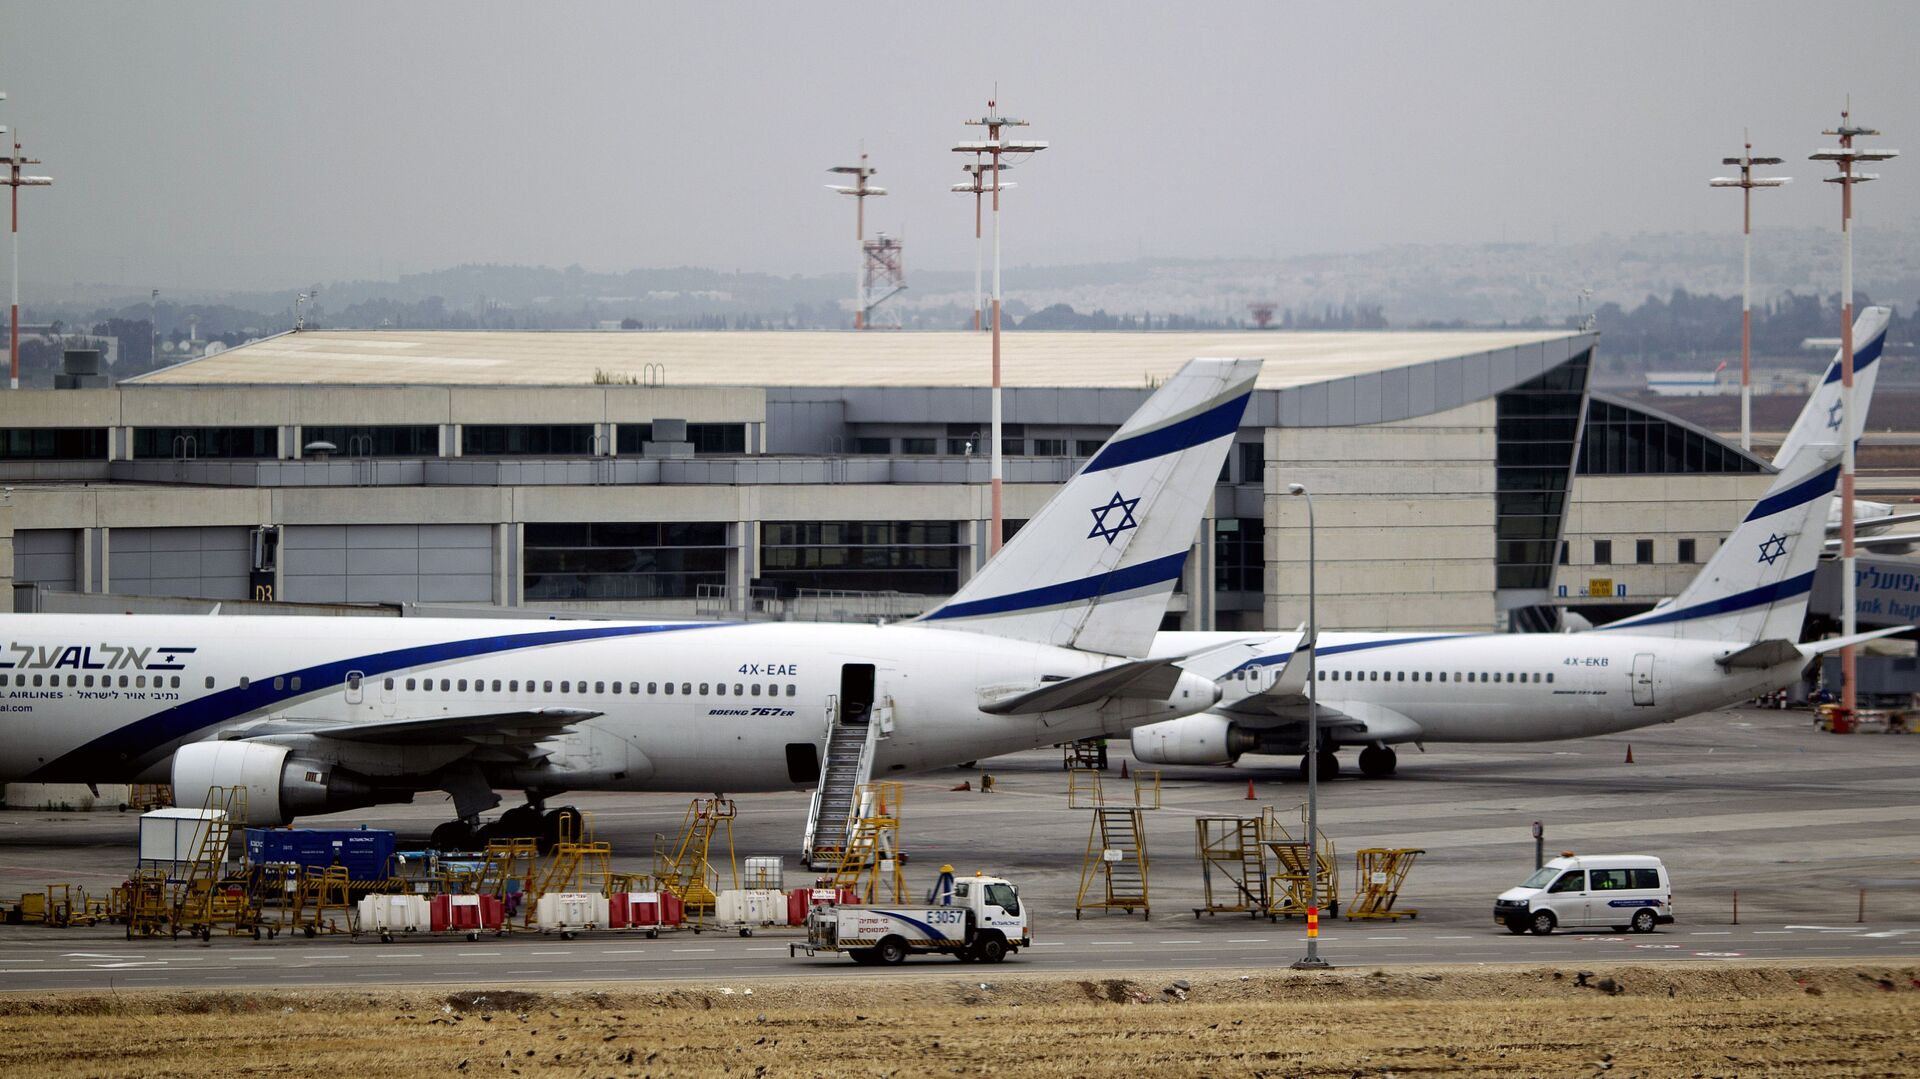 مطار بن غوريون الدولي في تل أبيب، إسرائيل 21 أبريل/ نيسان 2013 - سبوتنيك عربي, 1920, 19.06.2022